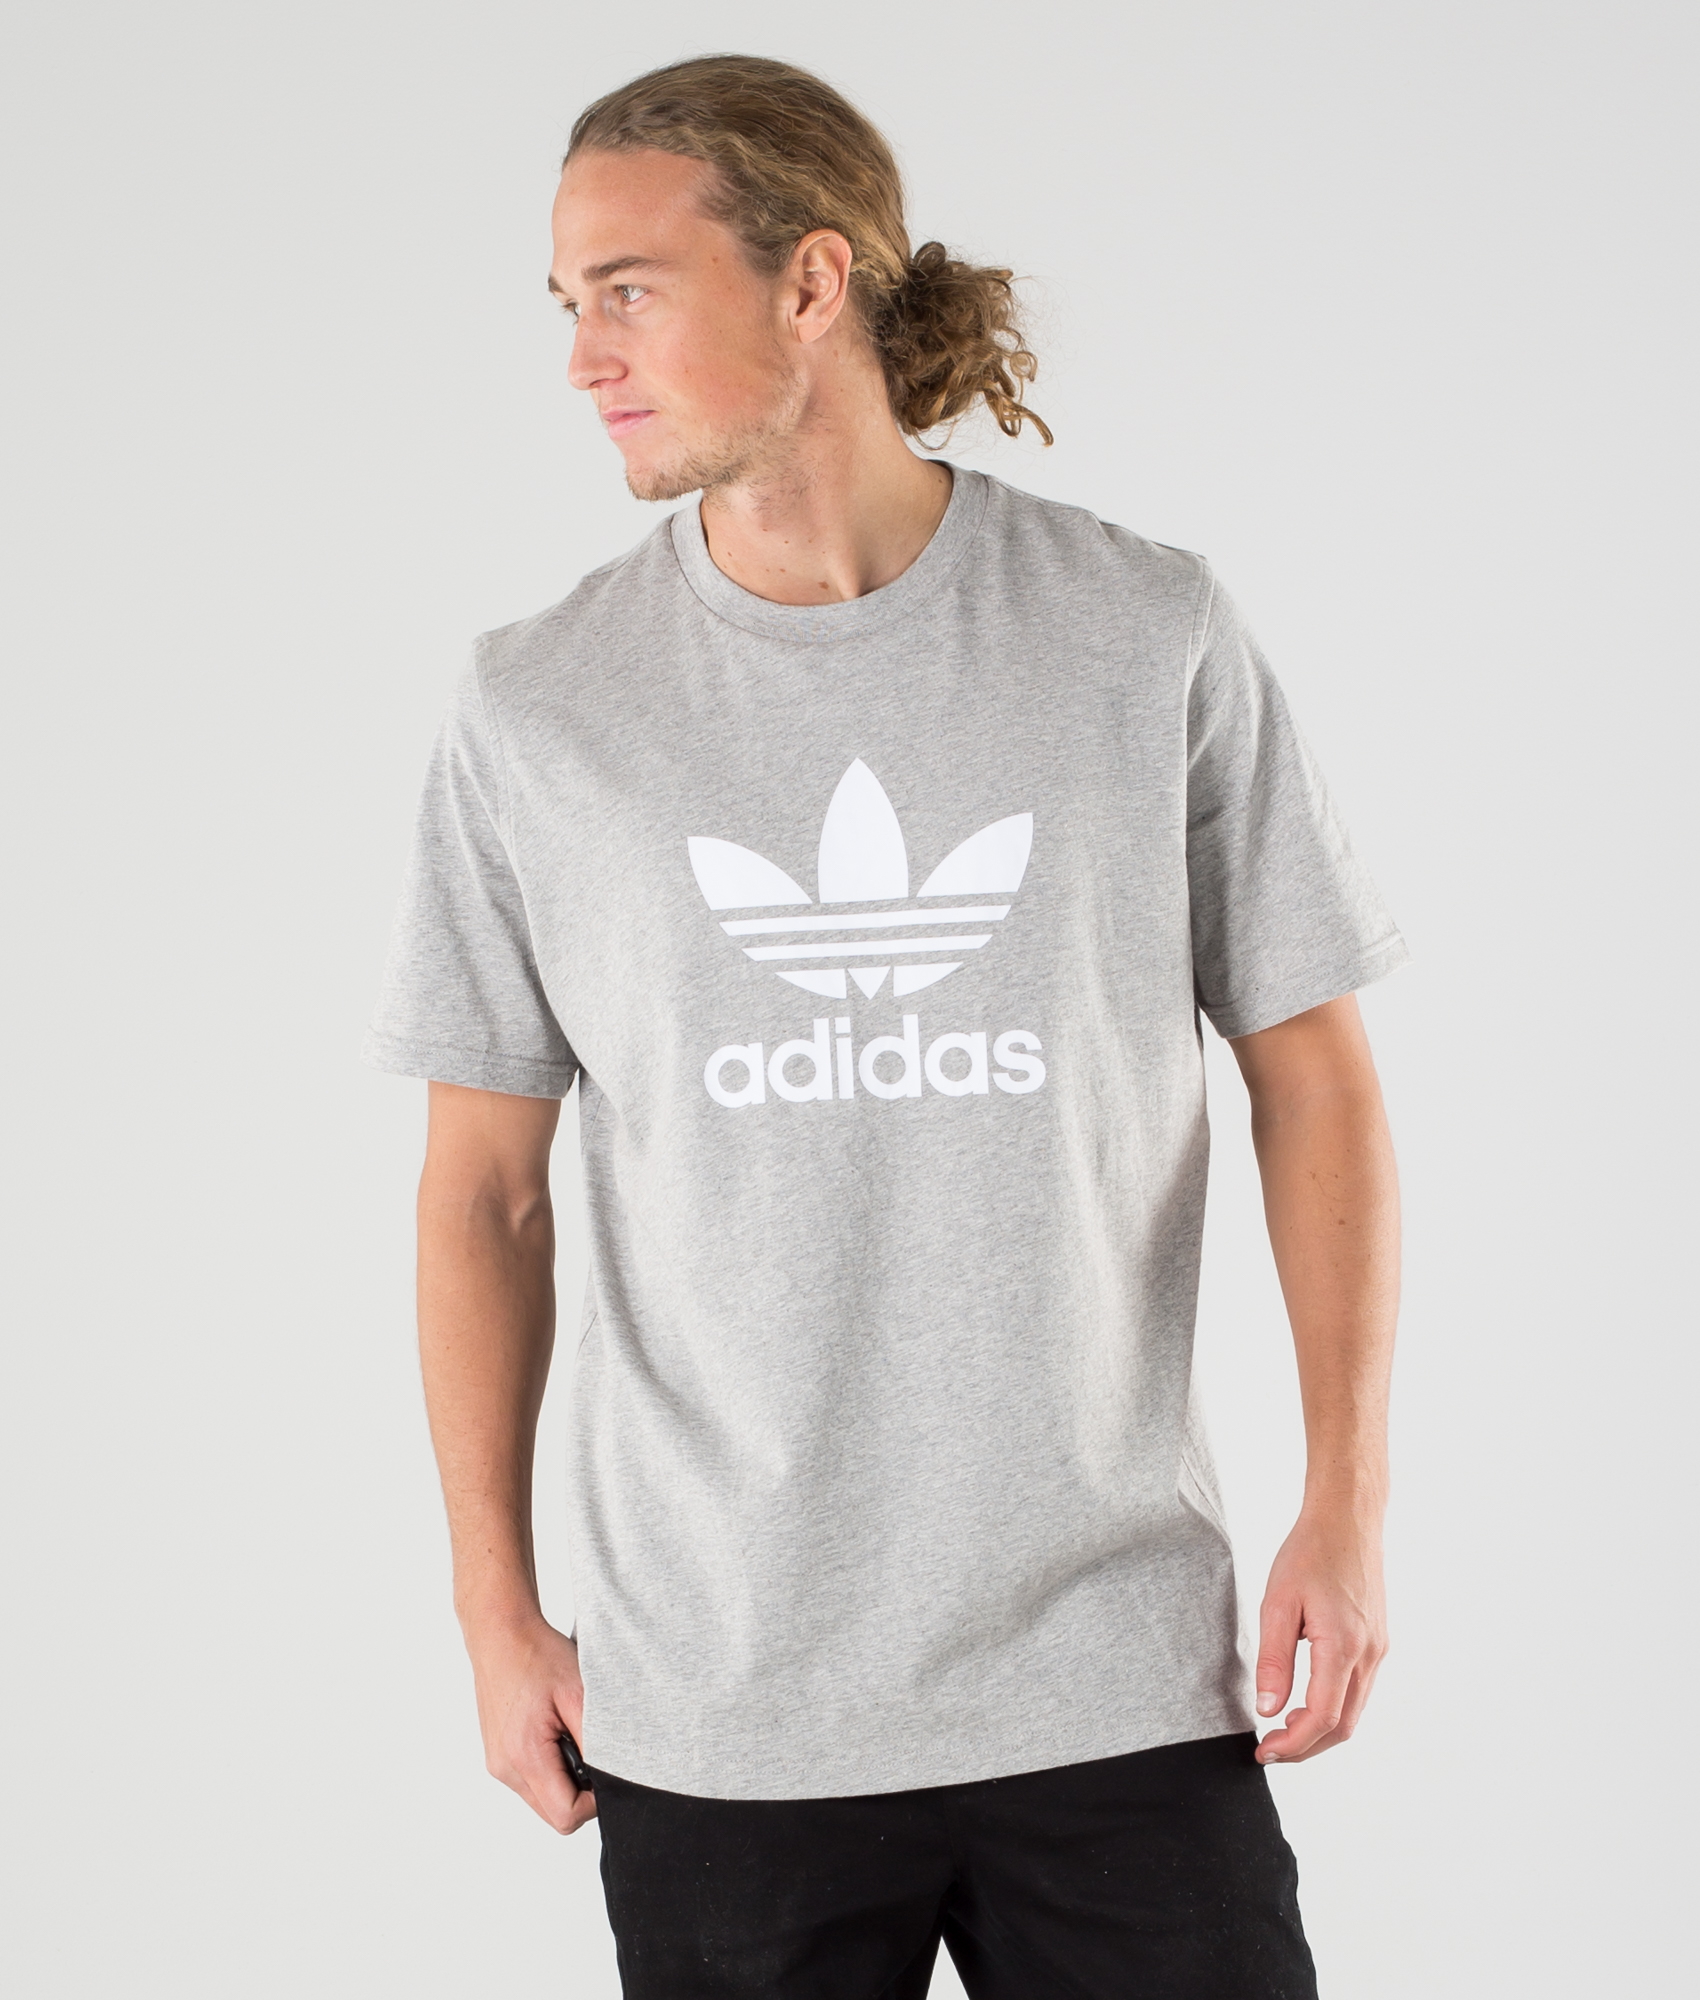 Adidas Originals Trefoil T-shirt Medium 